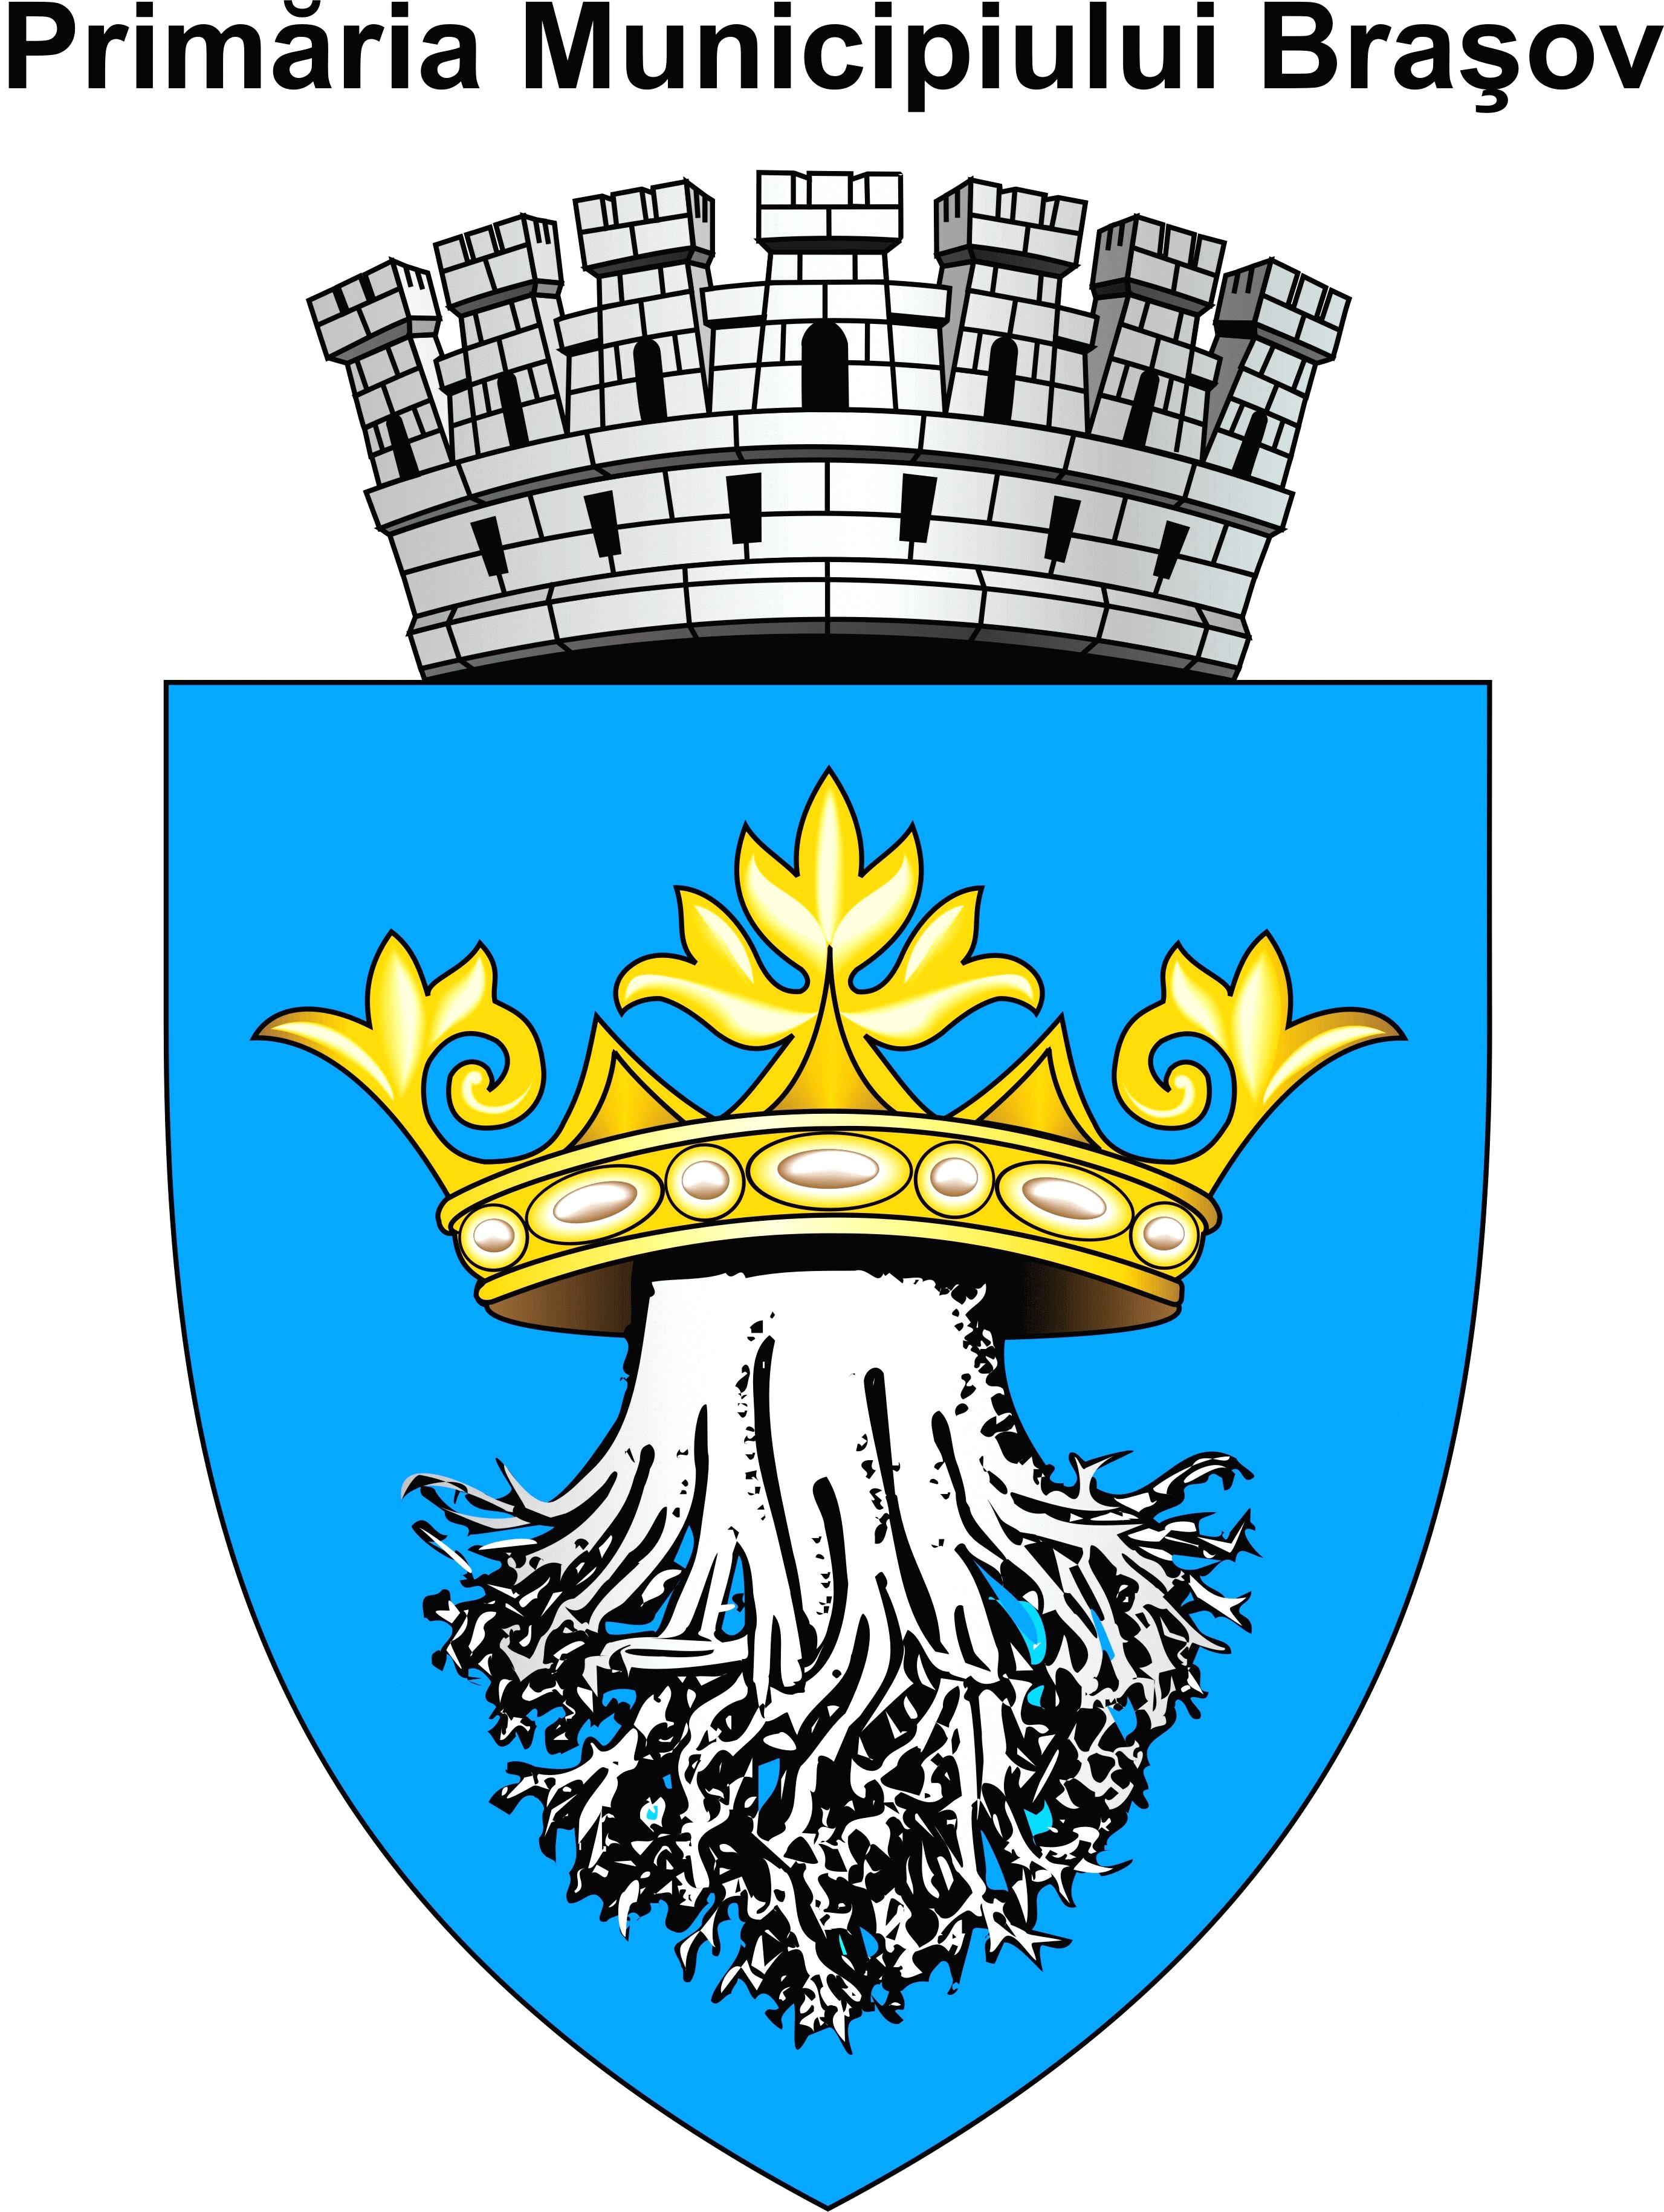 Primaria Brasov